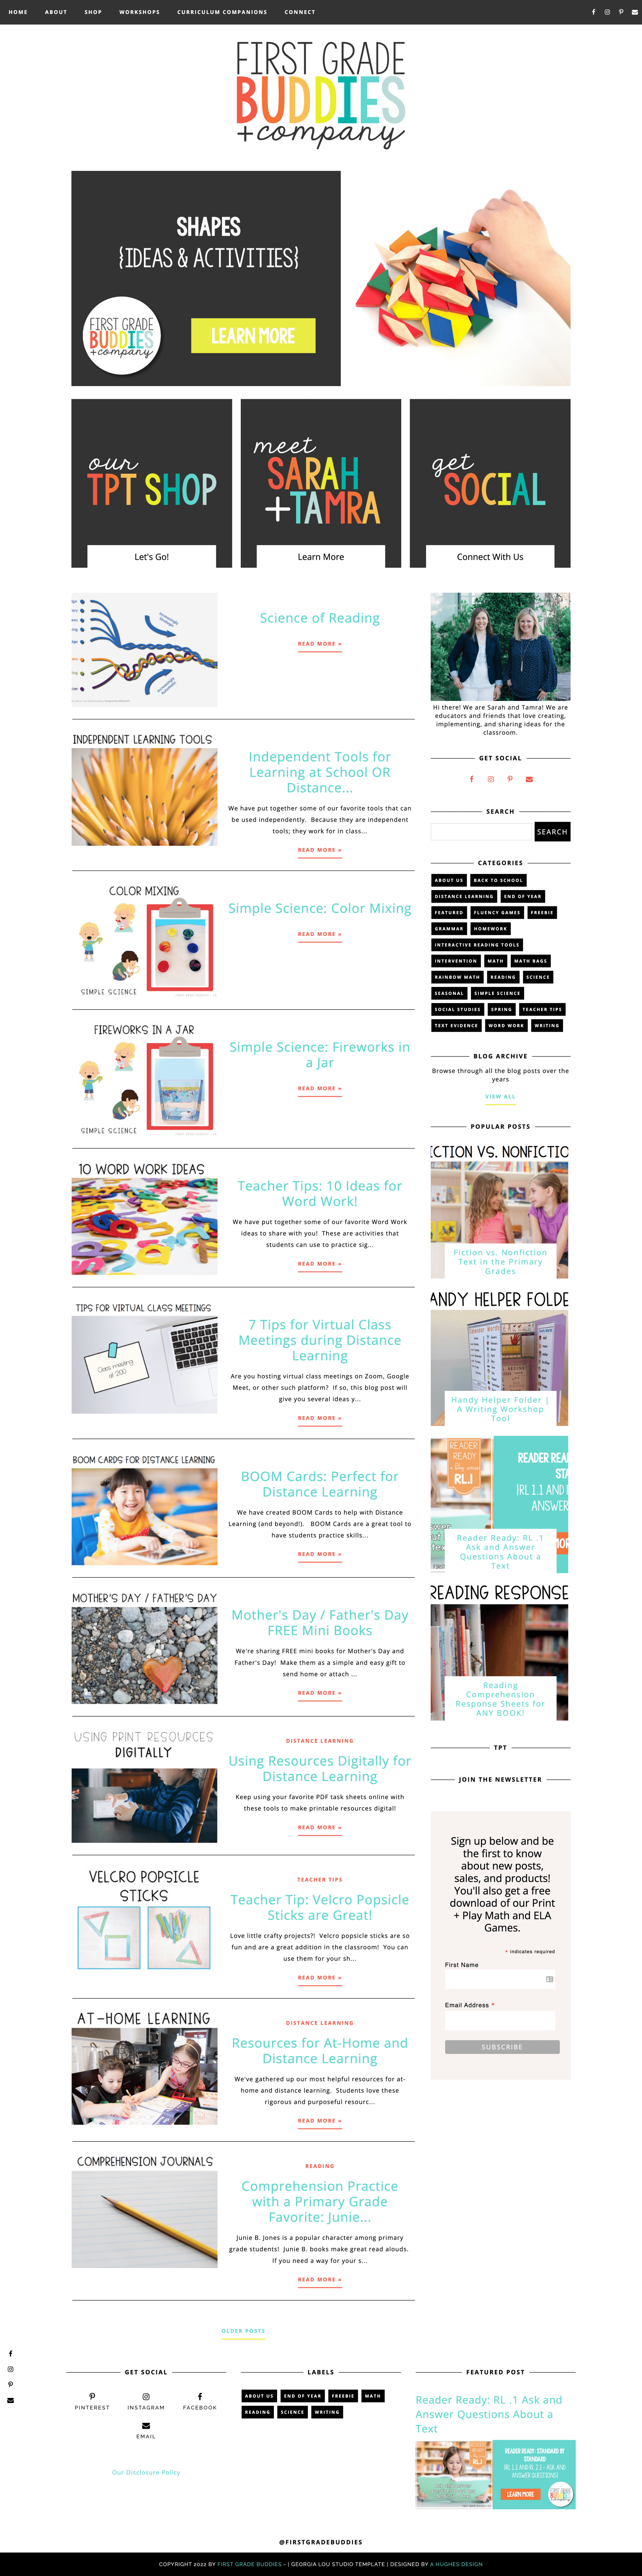 First Grade Buddies Website Design